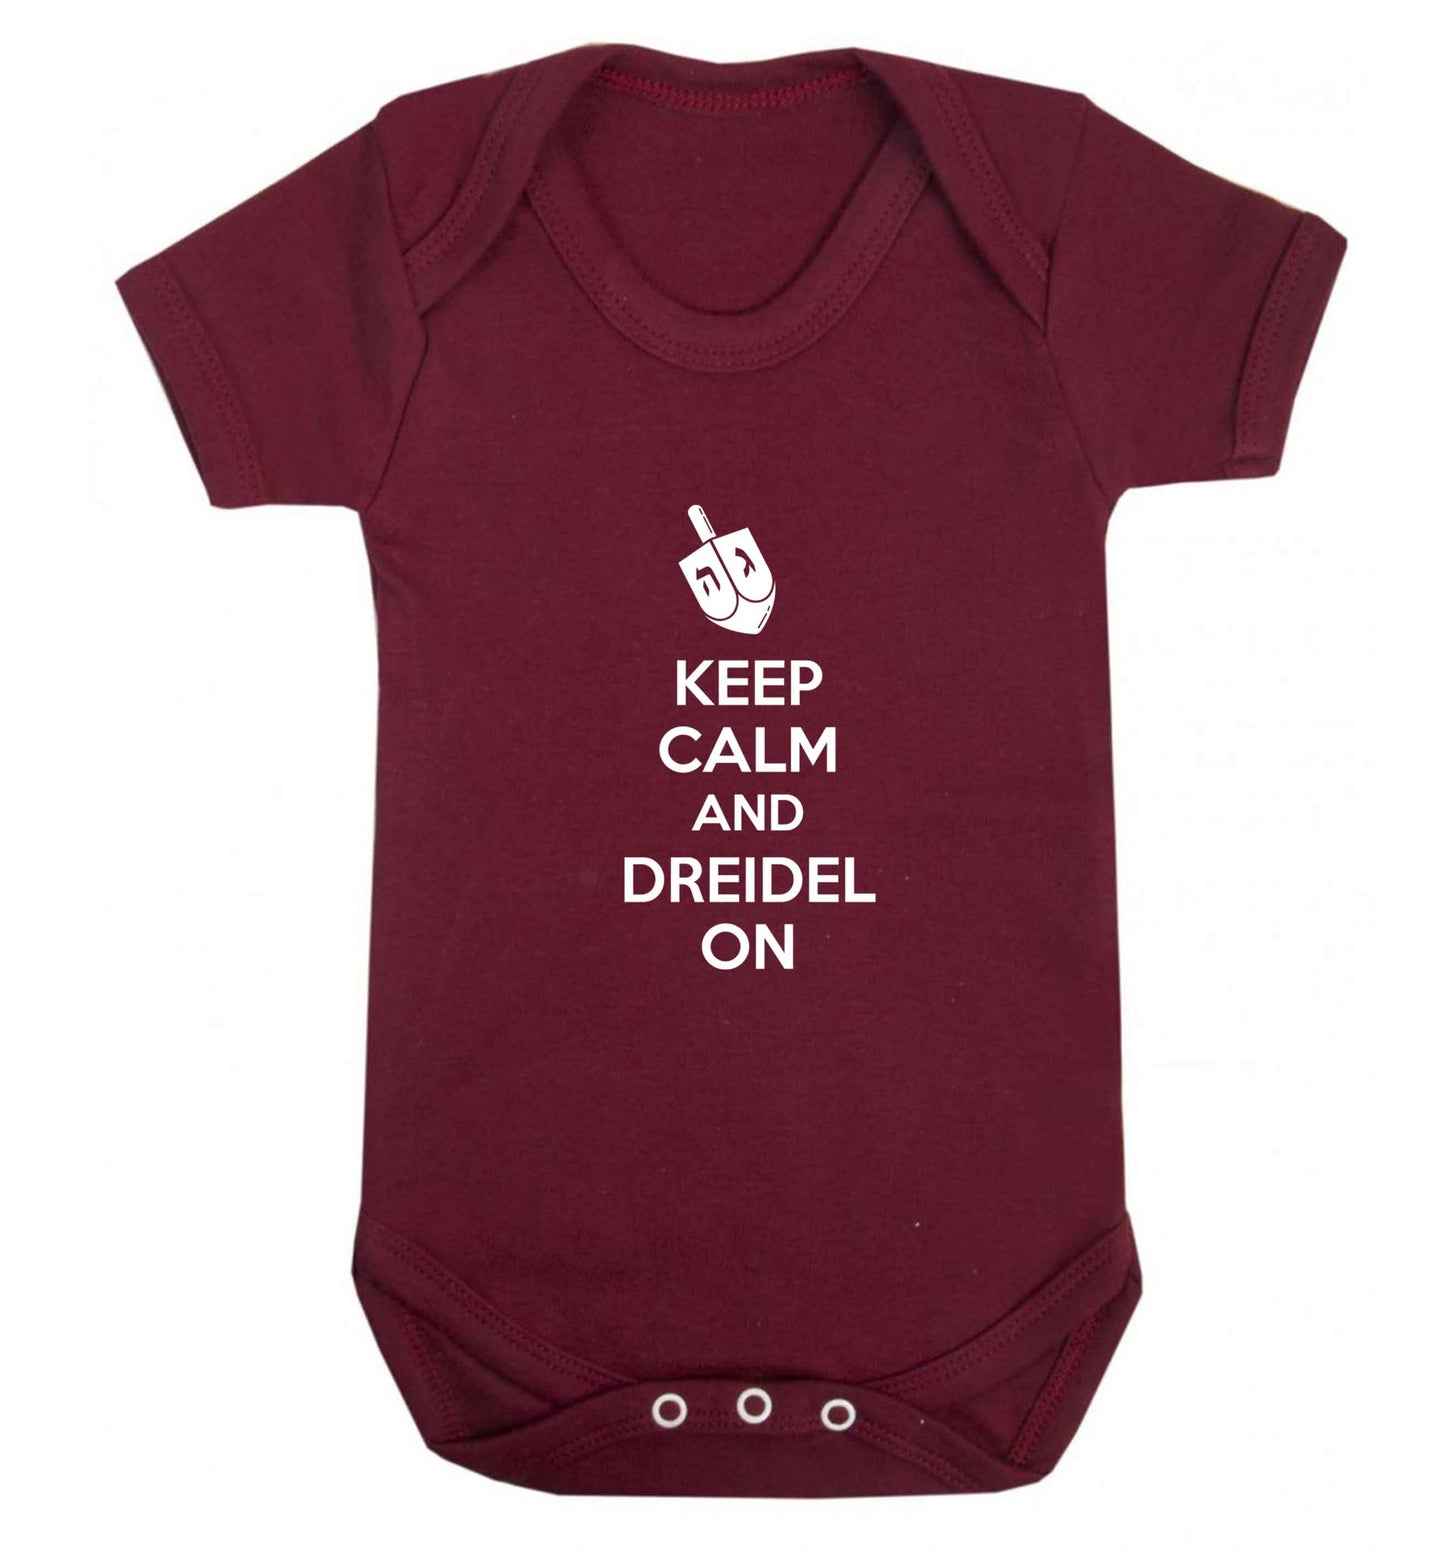 Keep calm and dreidel on baby vest maroon 18-24 months